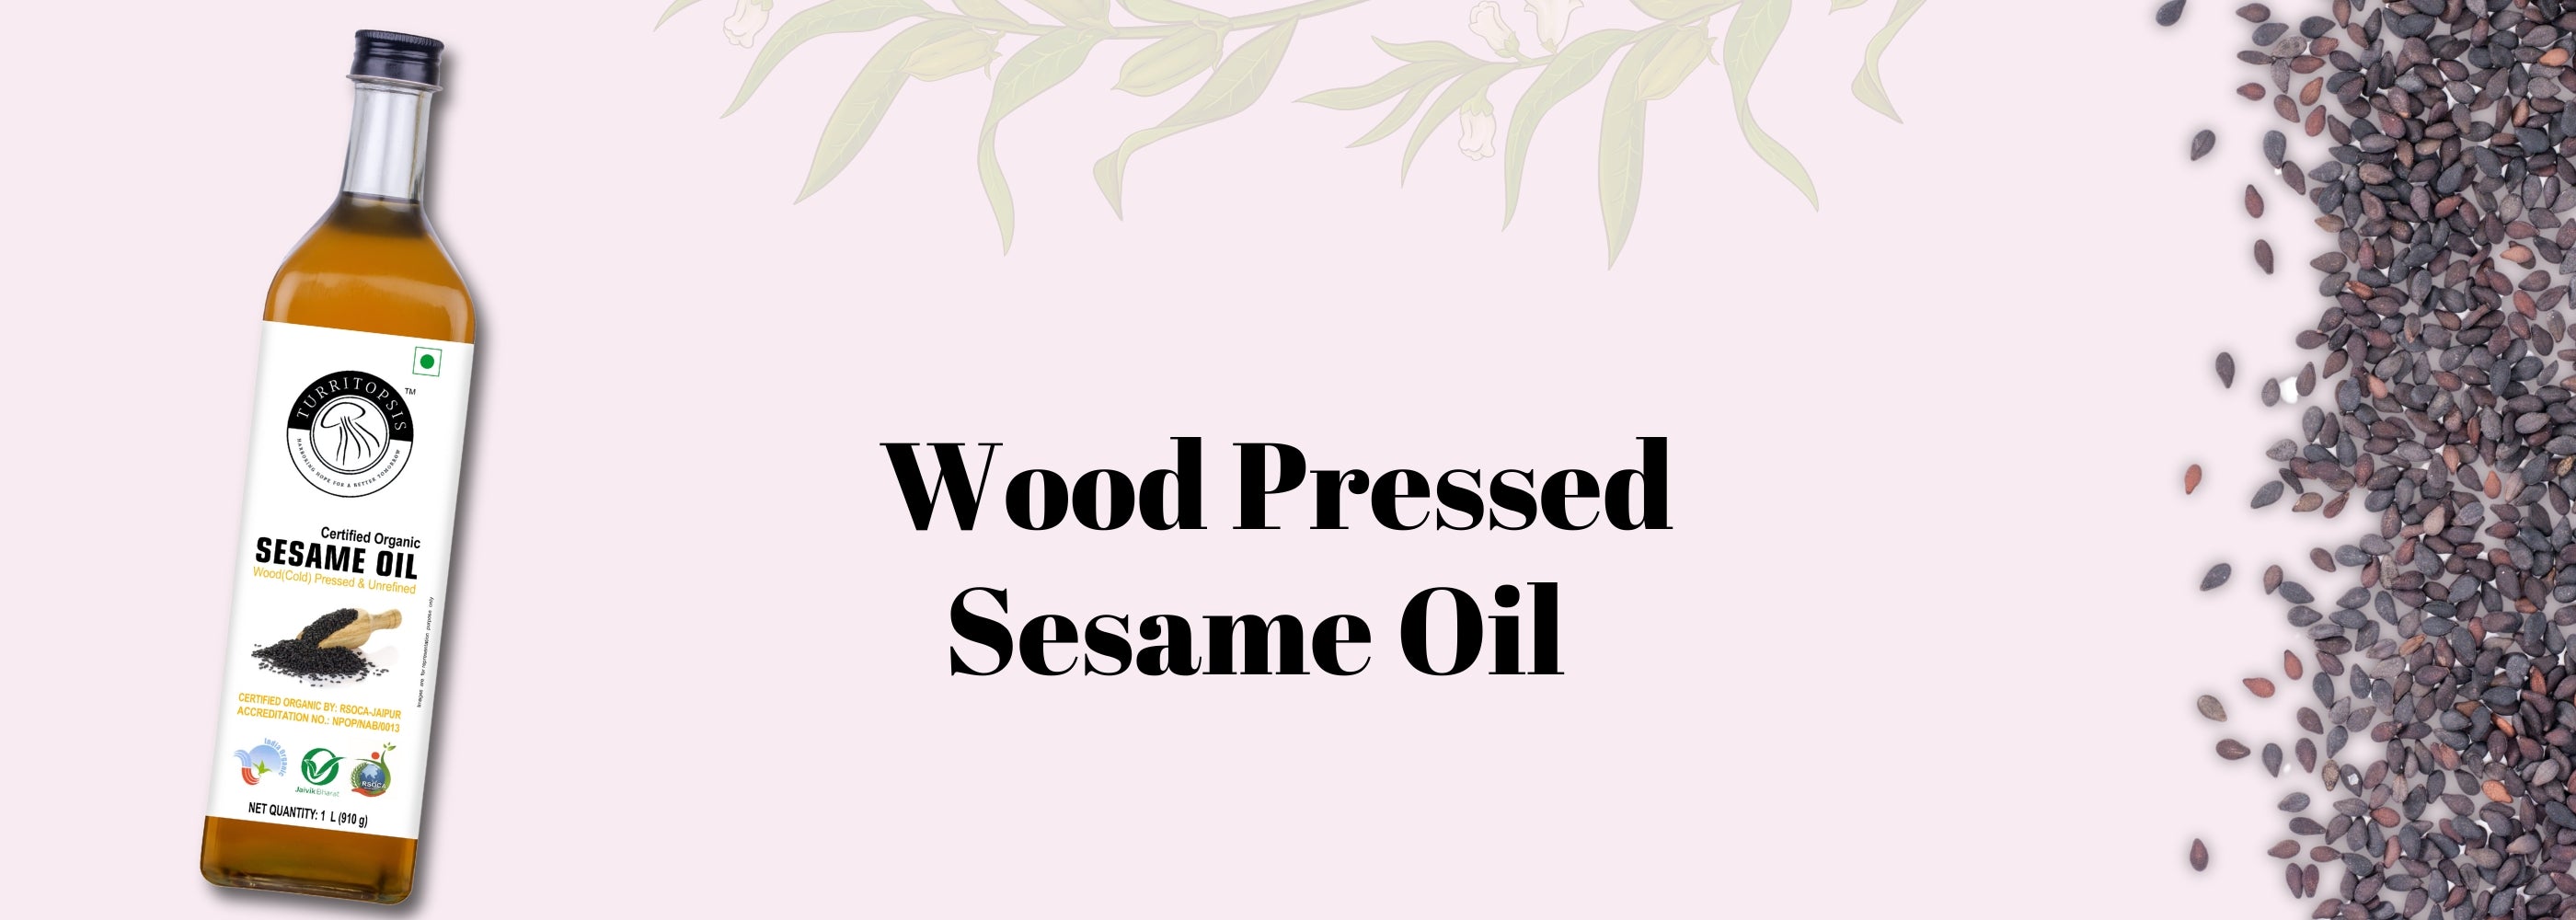 Cold pressed sesame oil